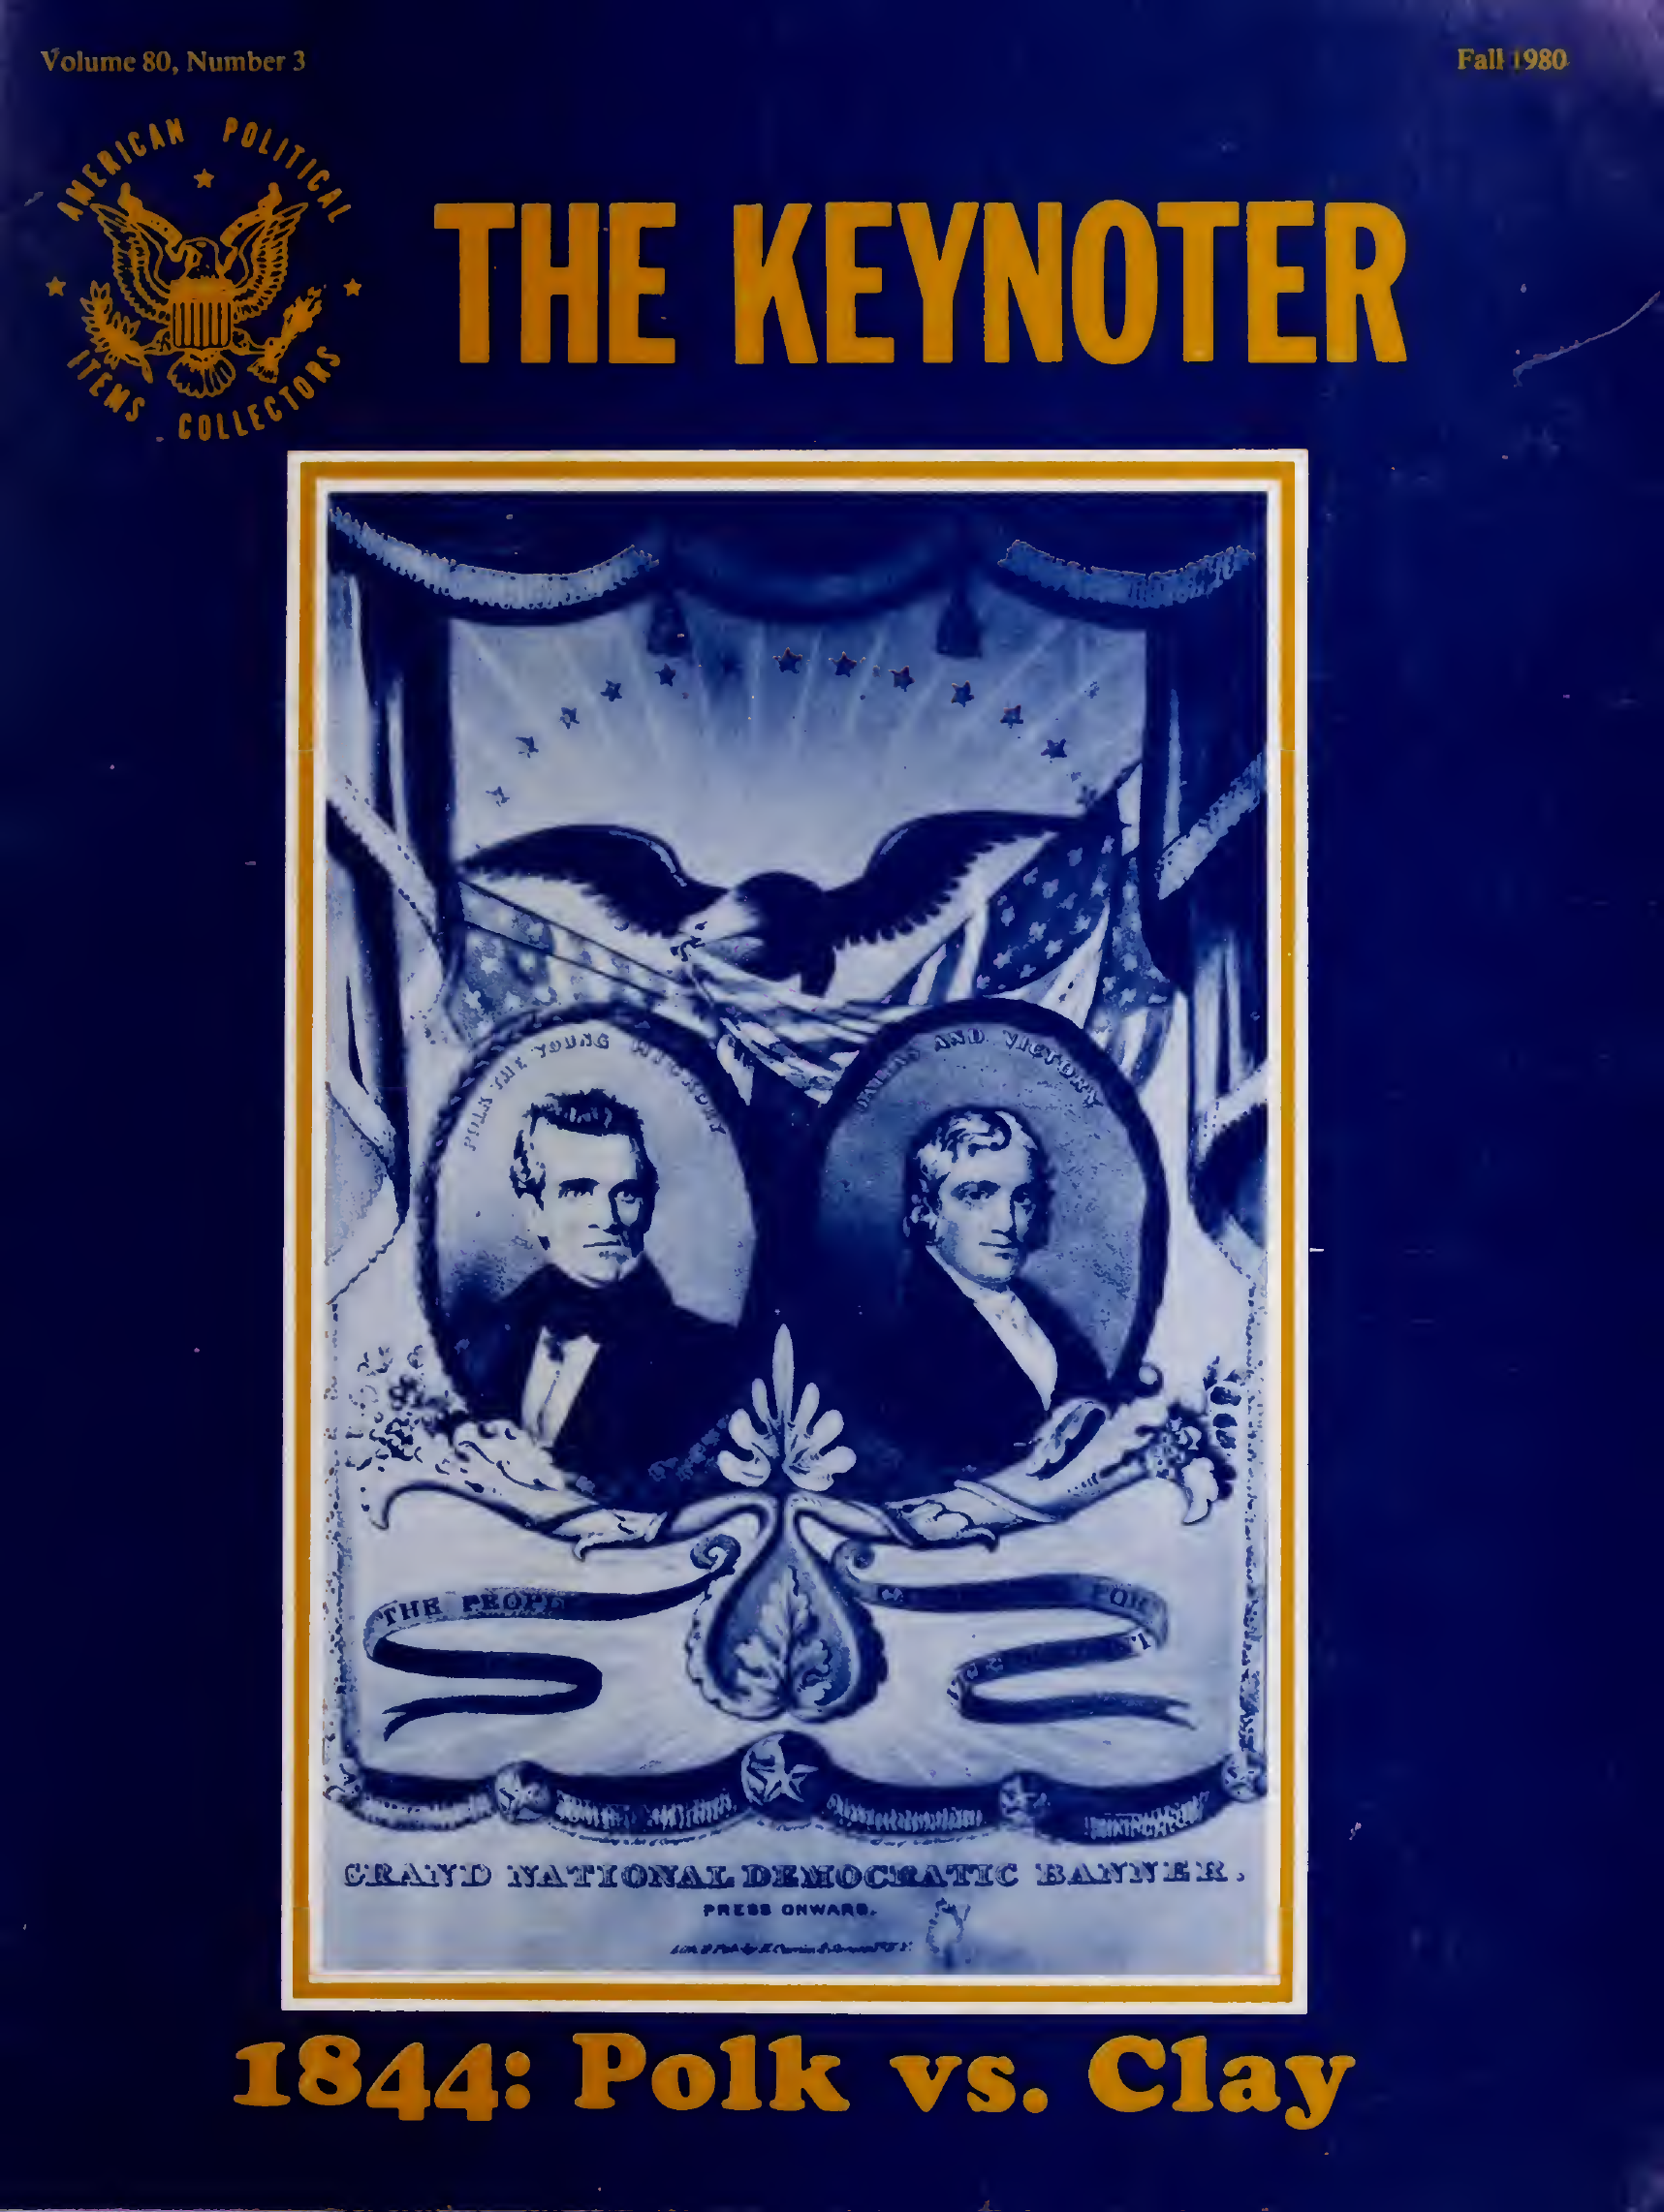 Keynoter 1980 - Fall - Issue 3